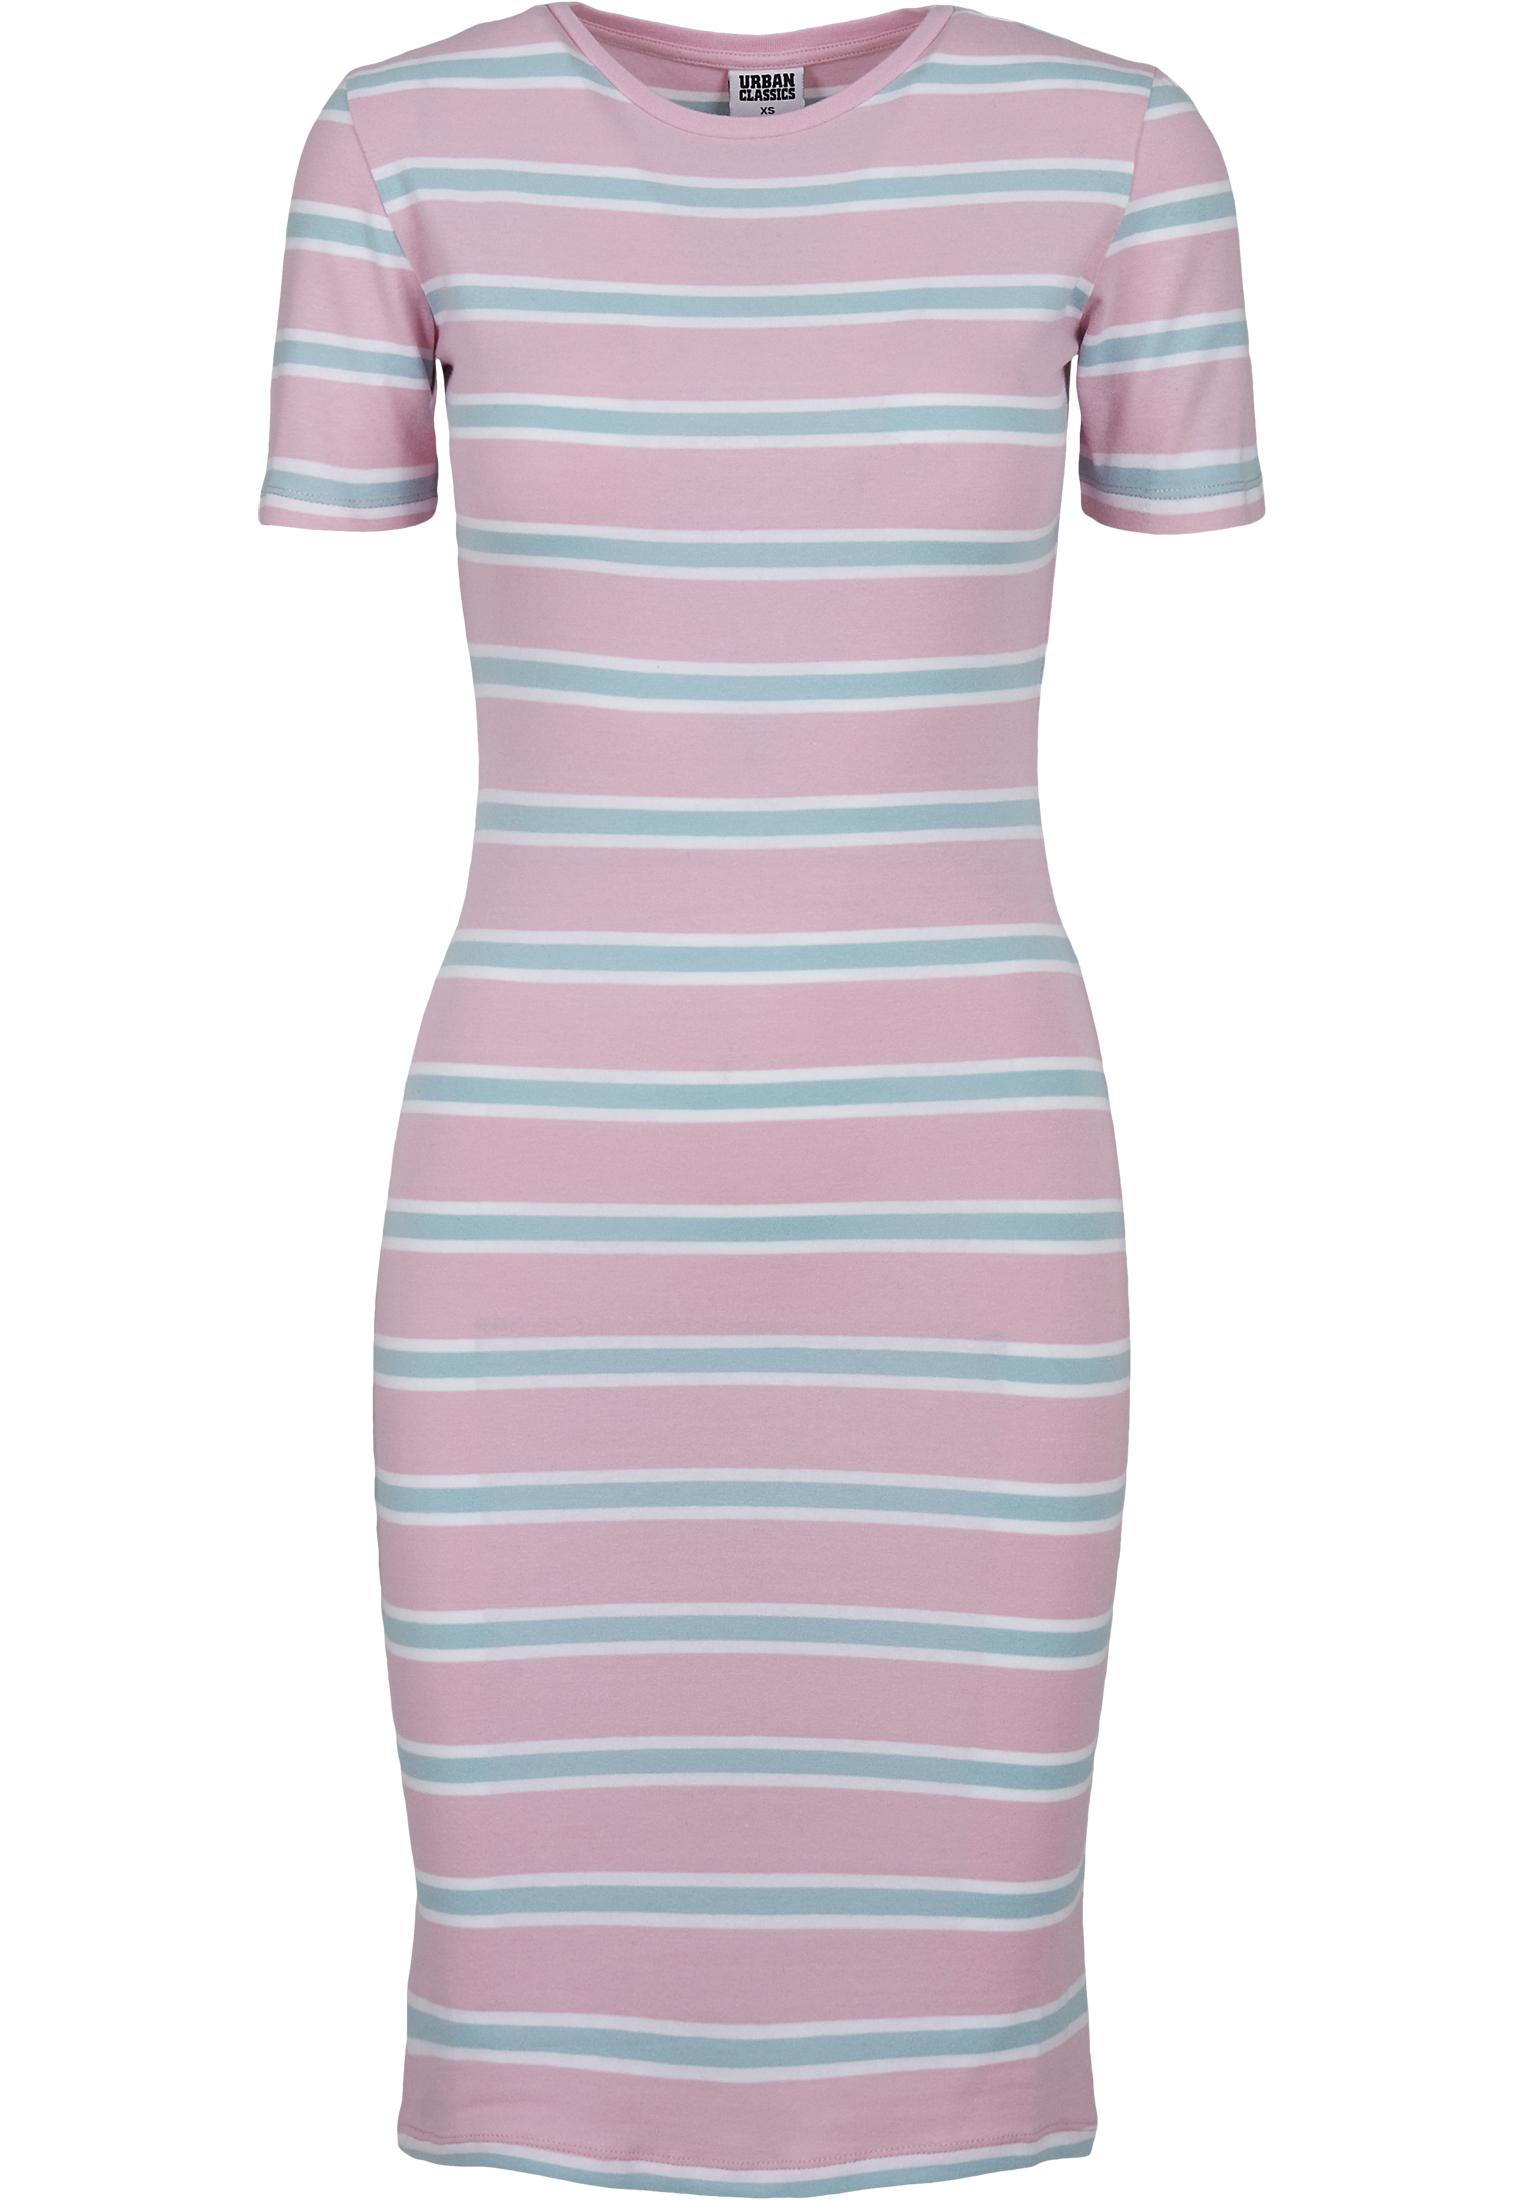 Kleider & R?cke Ladies Stretch Stripe Dress in Farbe girlypink/oceanblue